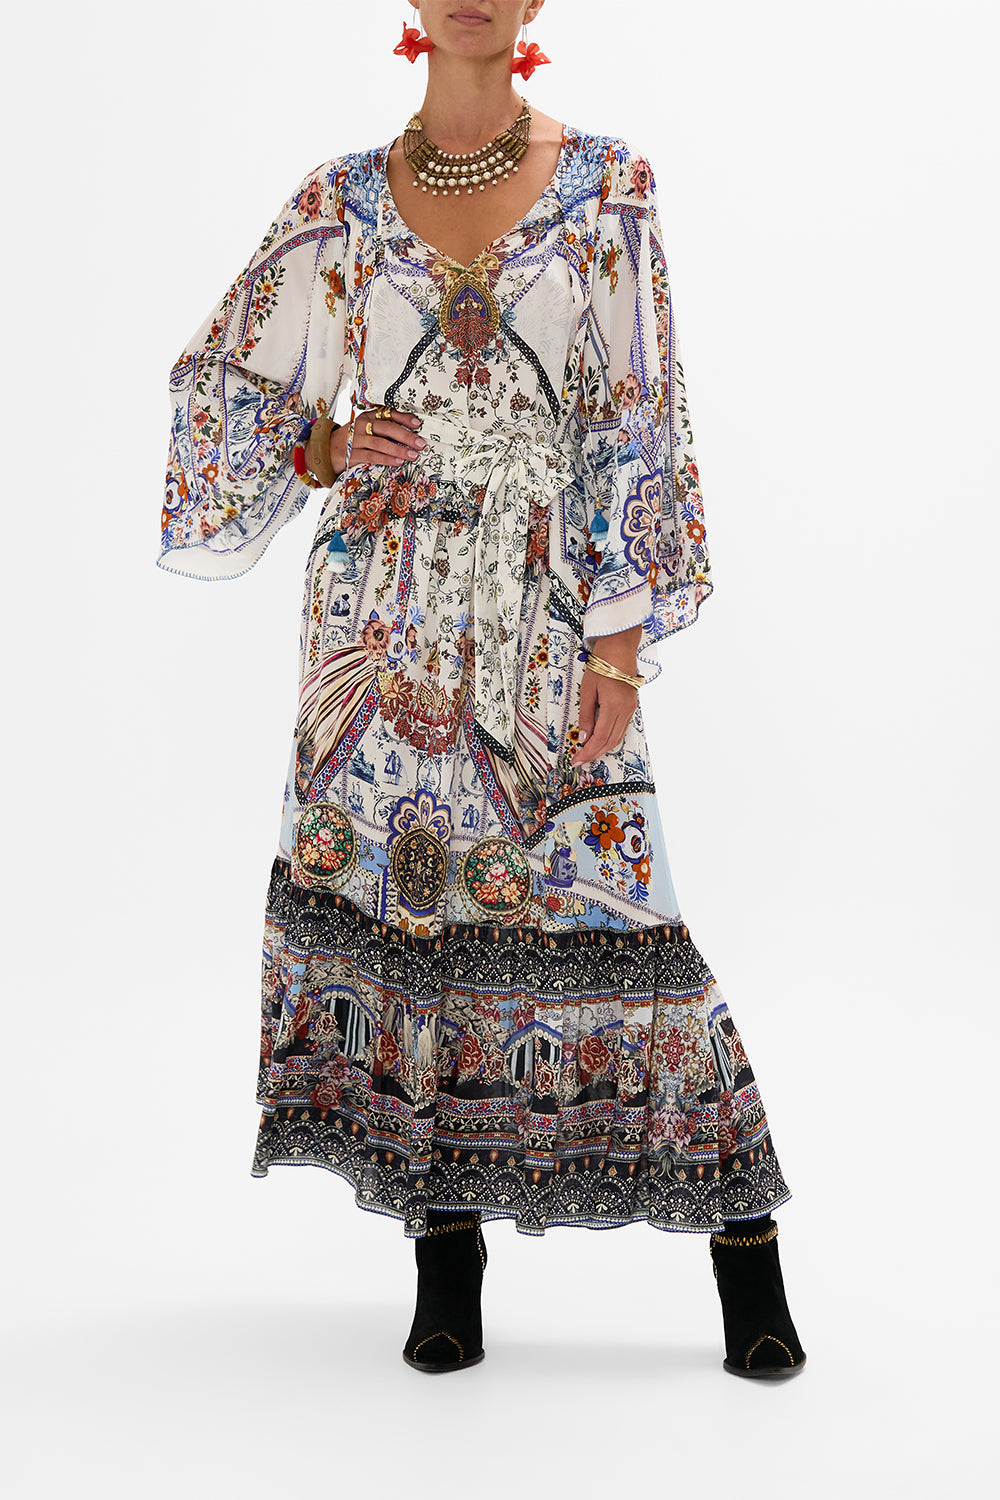 CAMILLA silk dress in My Folk Art Heart print